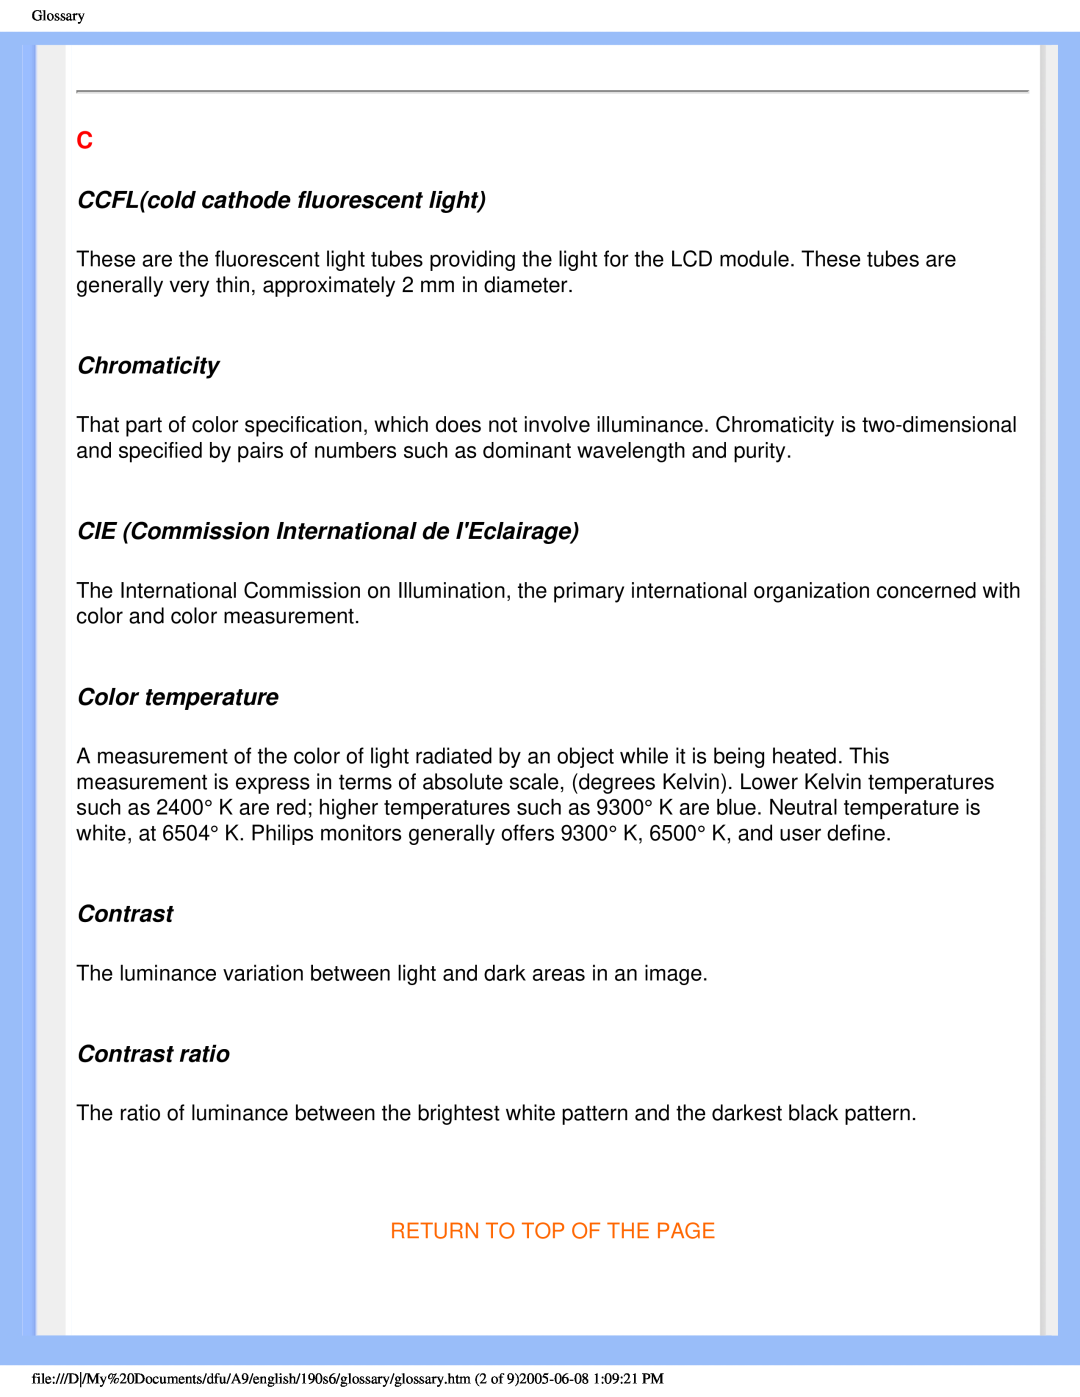 Philips 190P6 CCFLcold cathode fluorescent light, Chromaticity, CIE Commission International de IEclairage, Contrast 